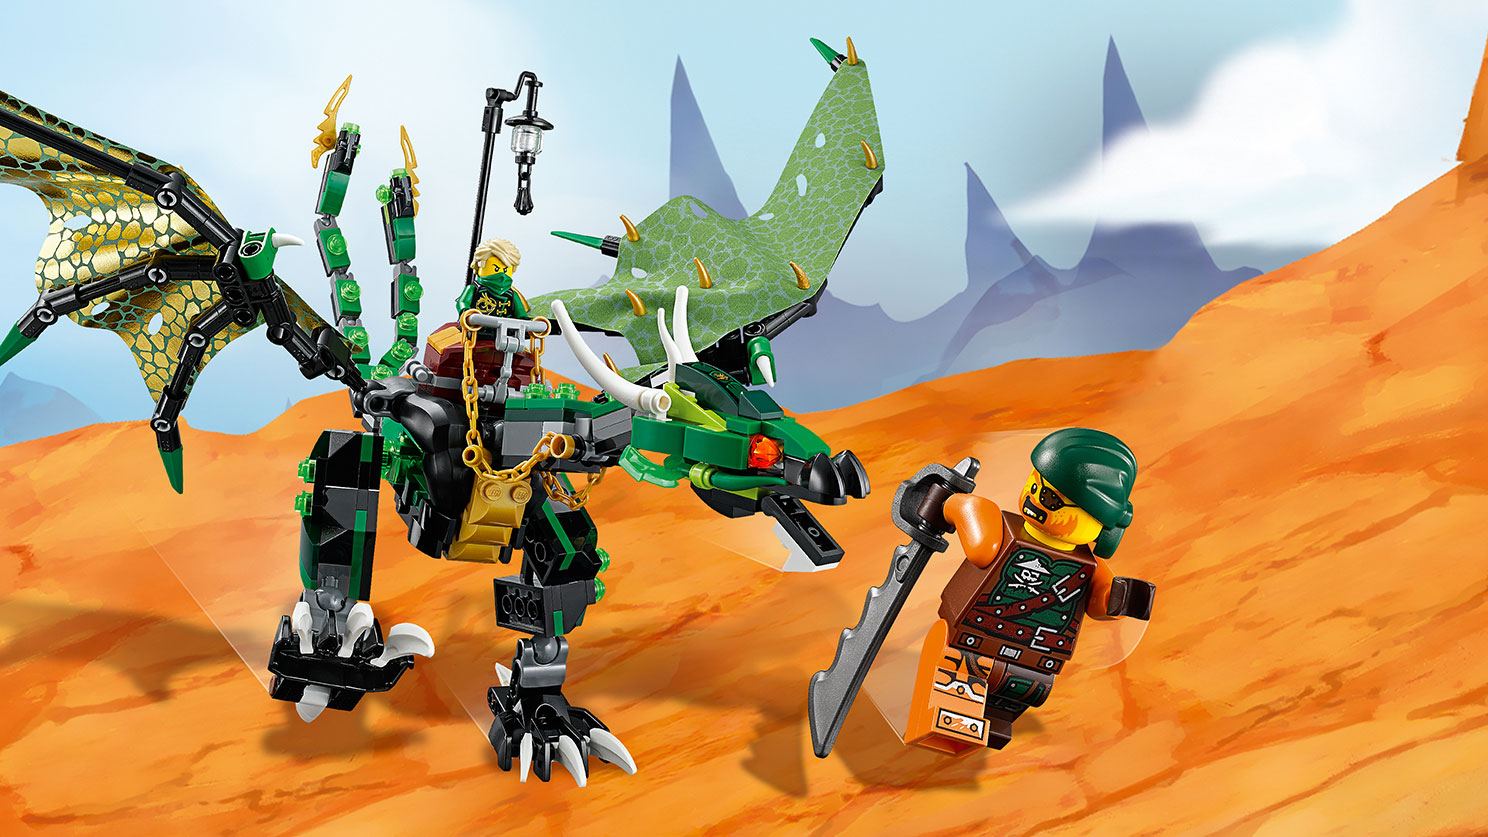 Lego Ninjago. Зелёный Дракон  